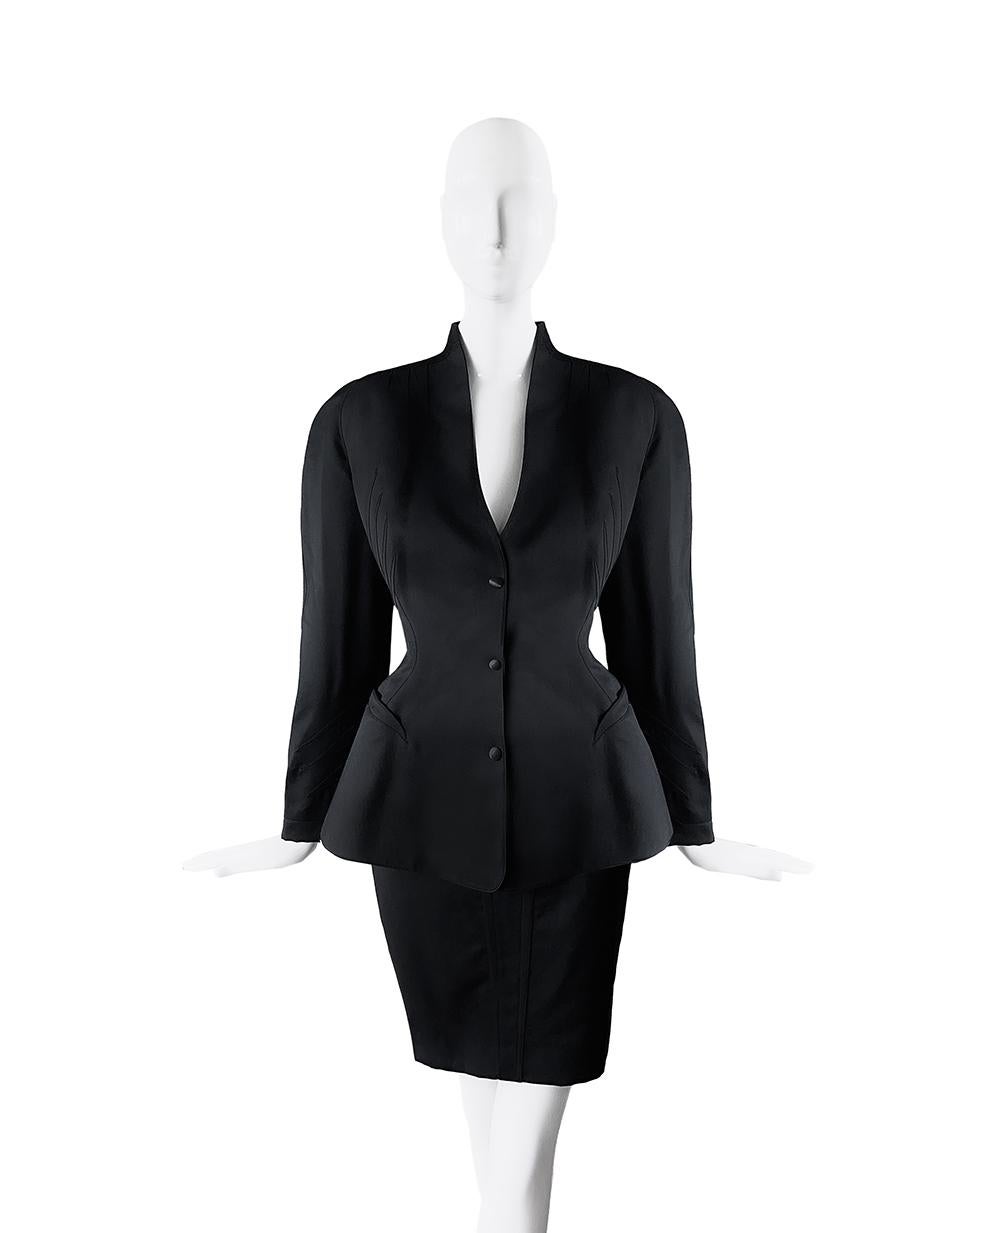 Thierry Mugler Black Suit Sculptural Jacket Skirtsuit